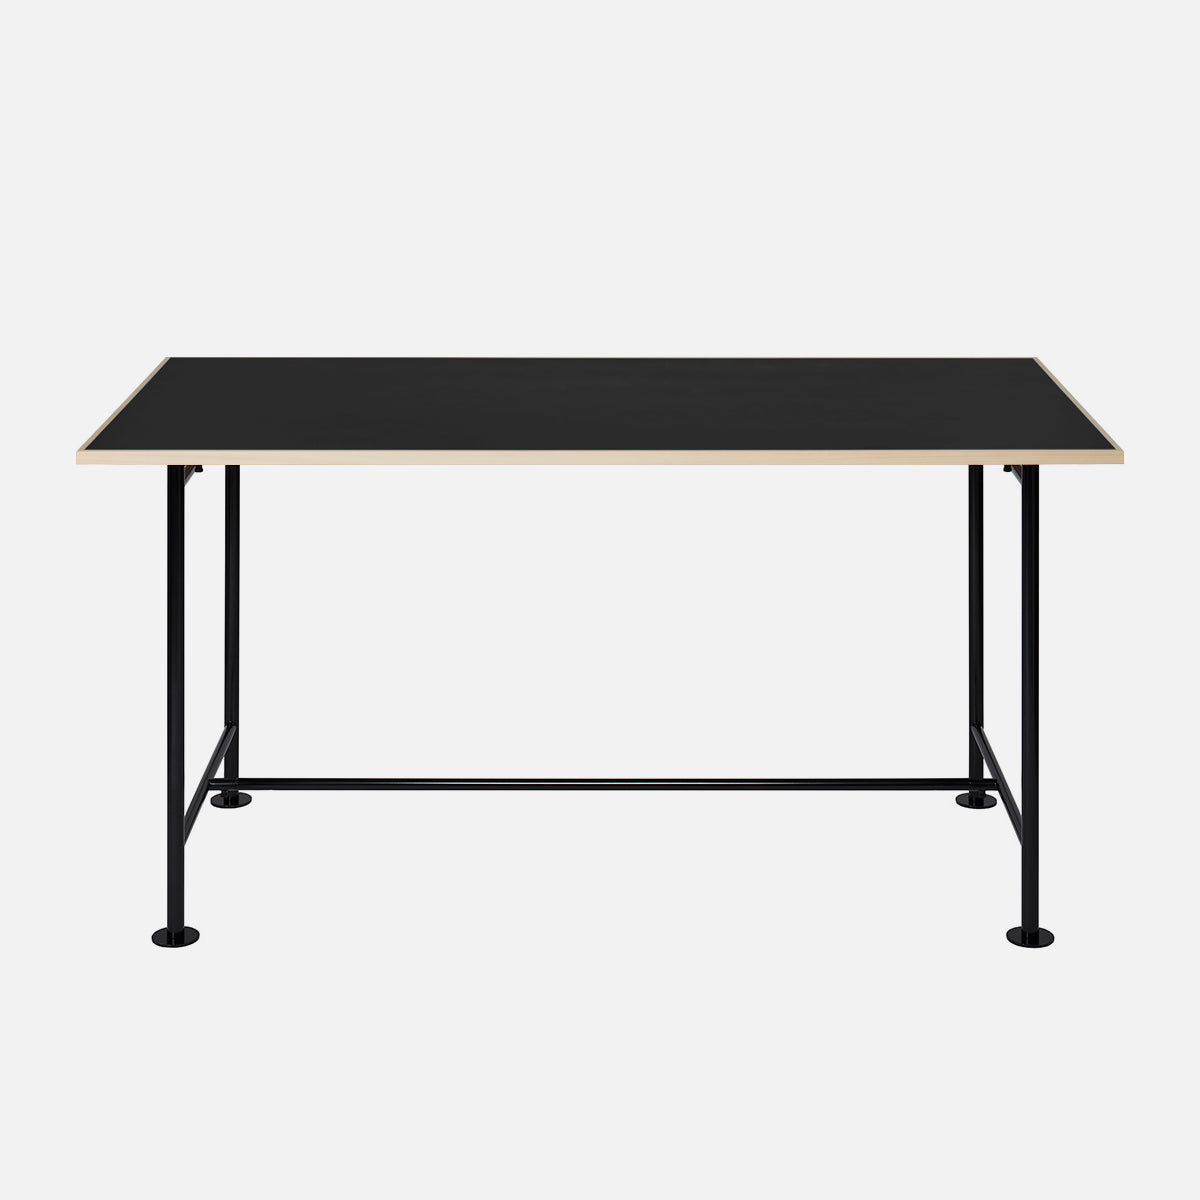 KIT Table TBL-01 BKBK WORK TABLE  ミーティングテーブル  ワークテーブル